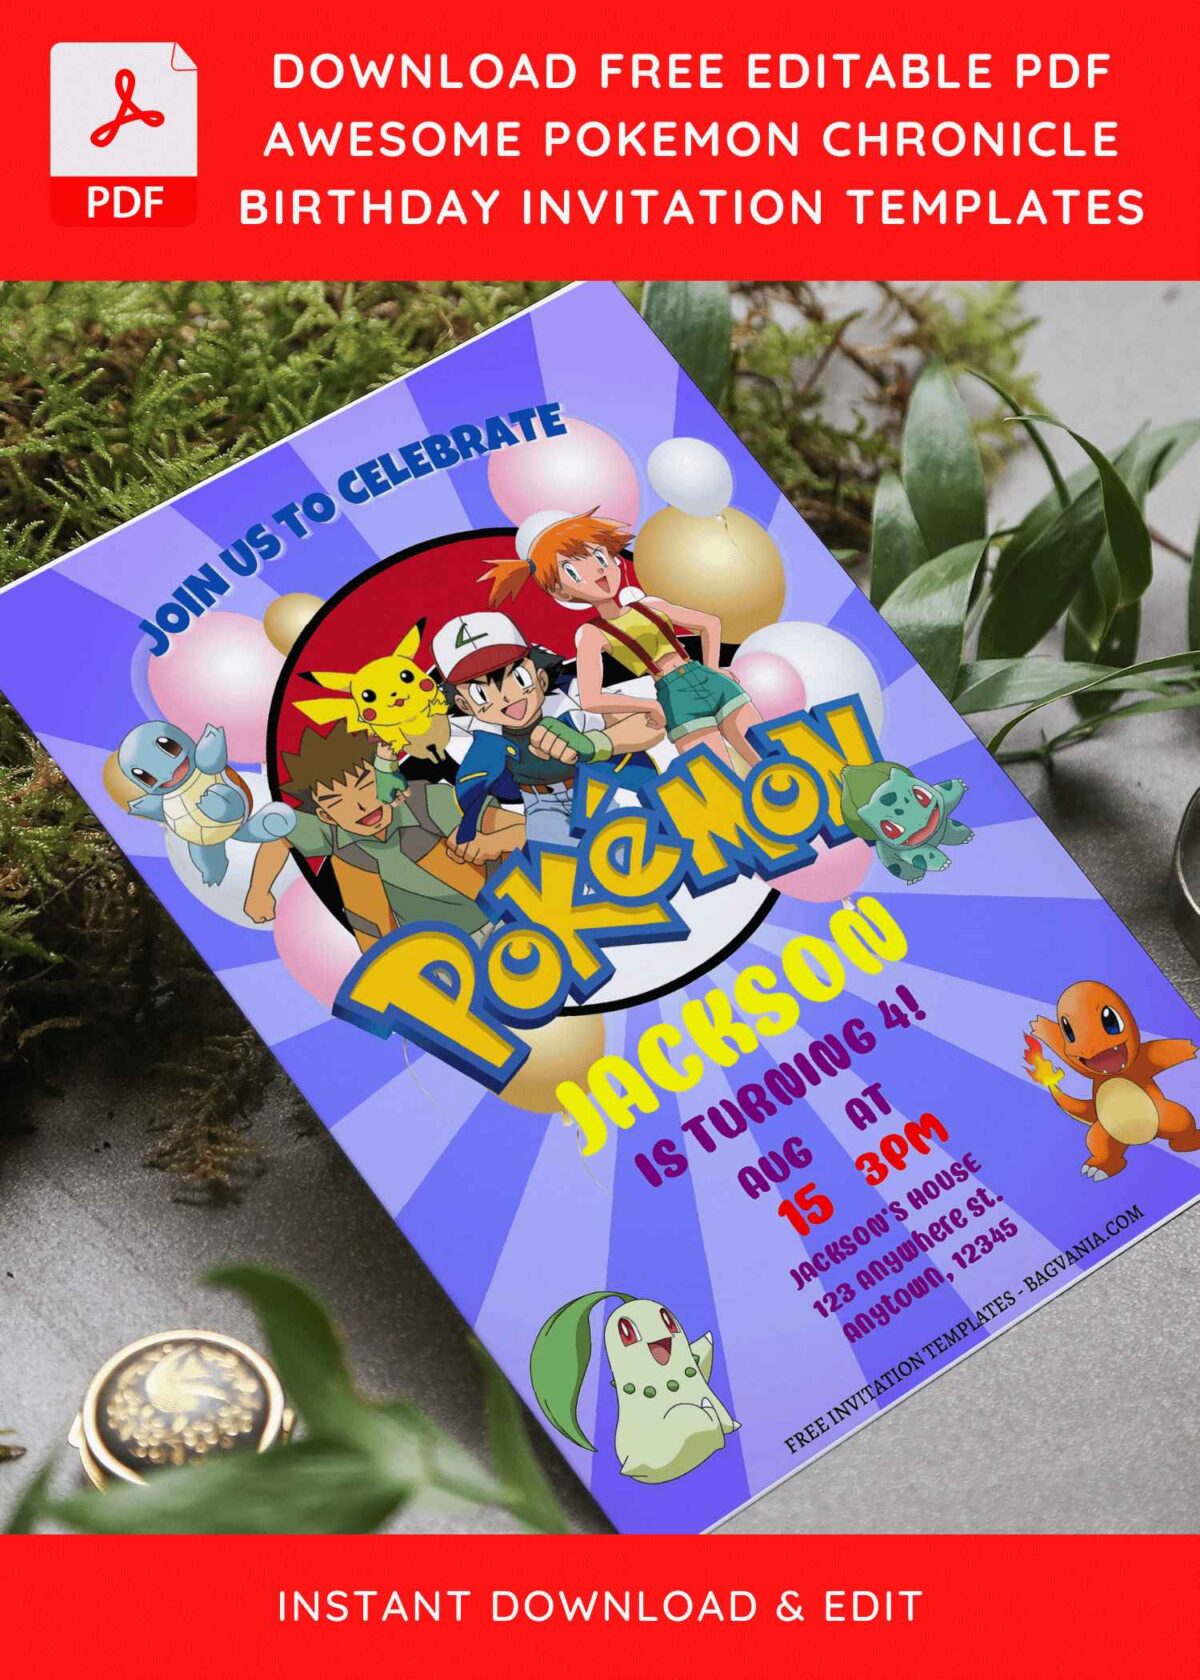 (Free Editable PDF) Epic Pokémon Chronicle Birthday Invitation Templates with Brook